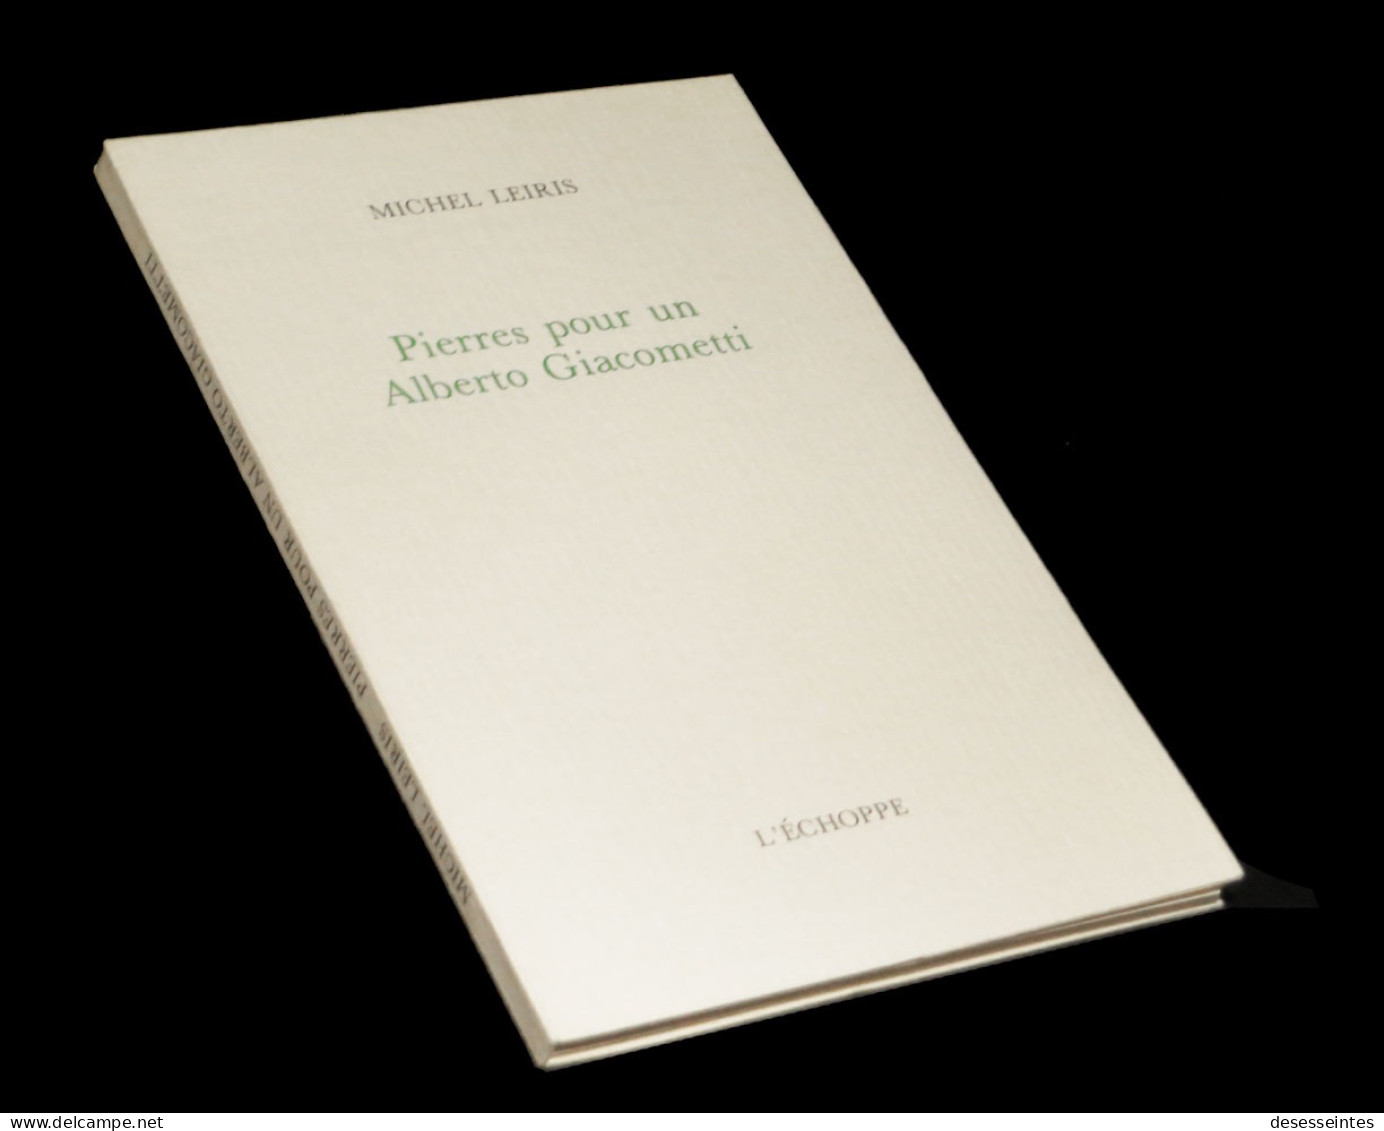 [L'ECHOPPE] LEIRIS (Michel) - Pierres Pour Un Alberto Giacometti. EO. - Art